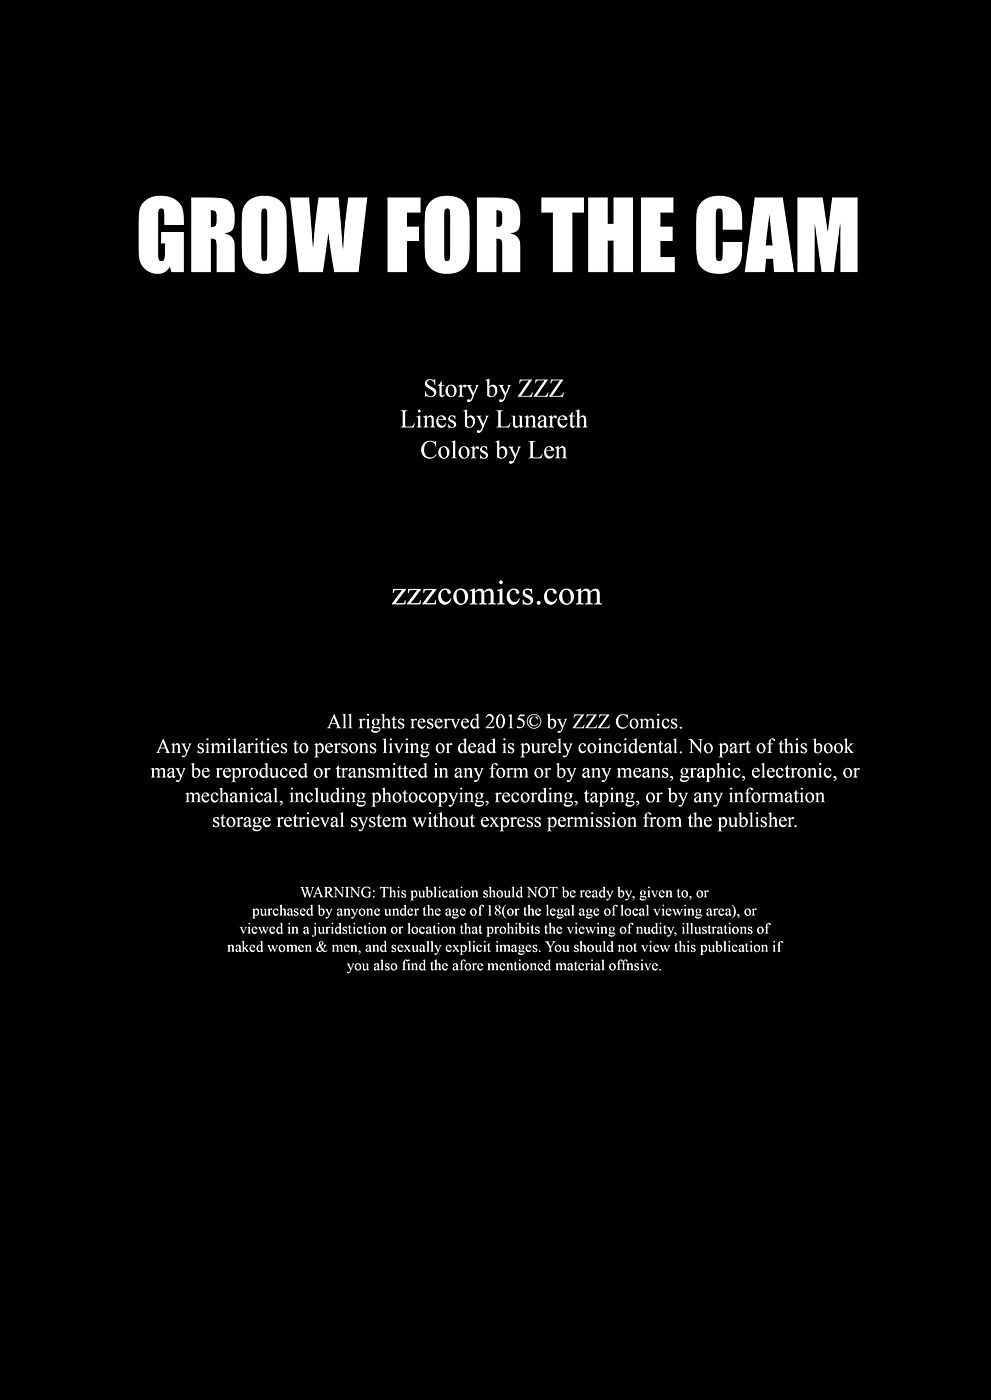 zzz 成長 のための の Cam